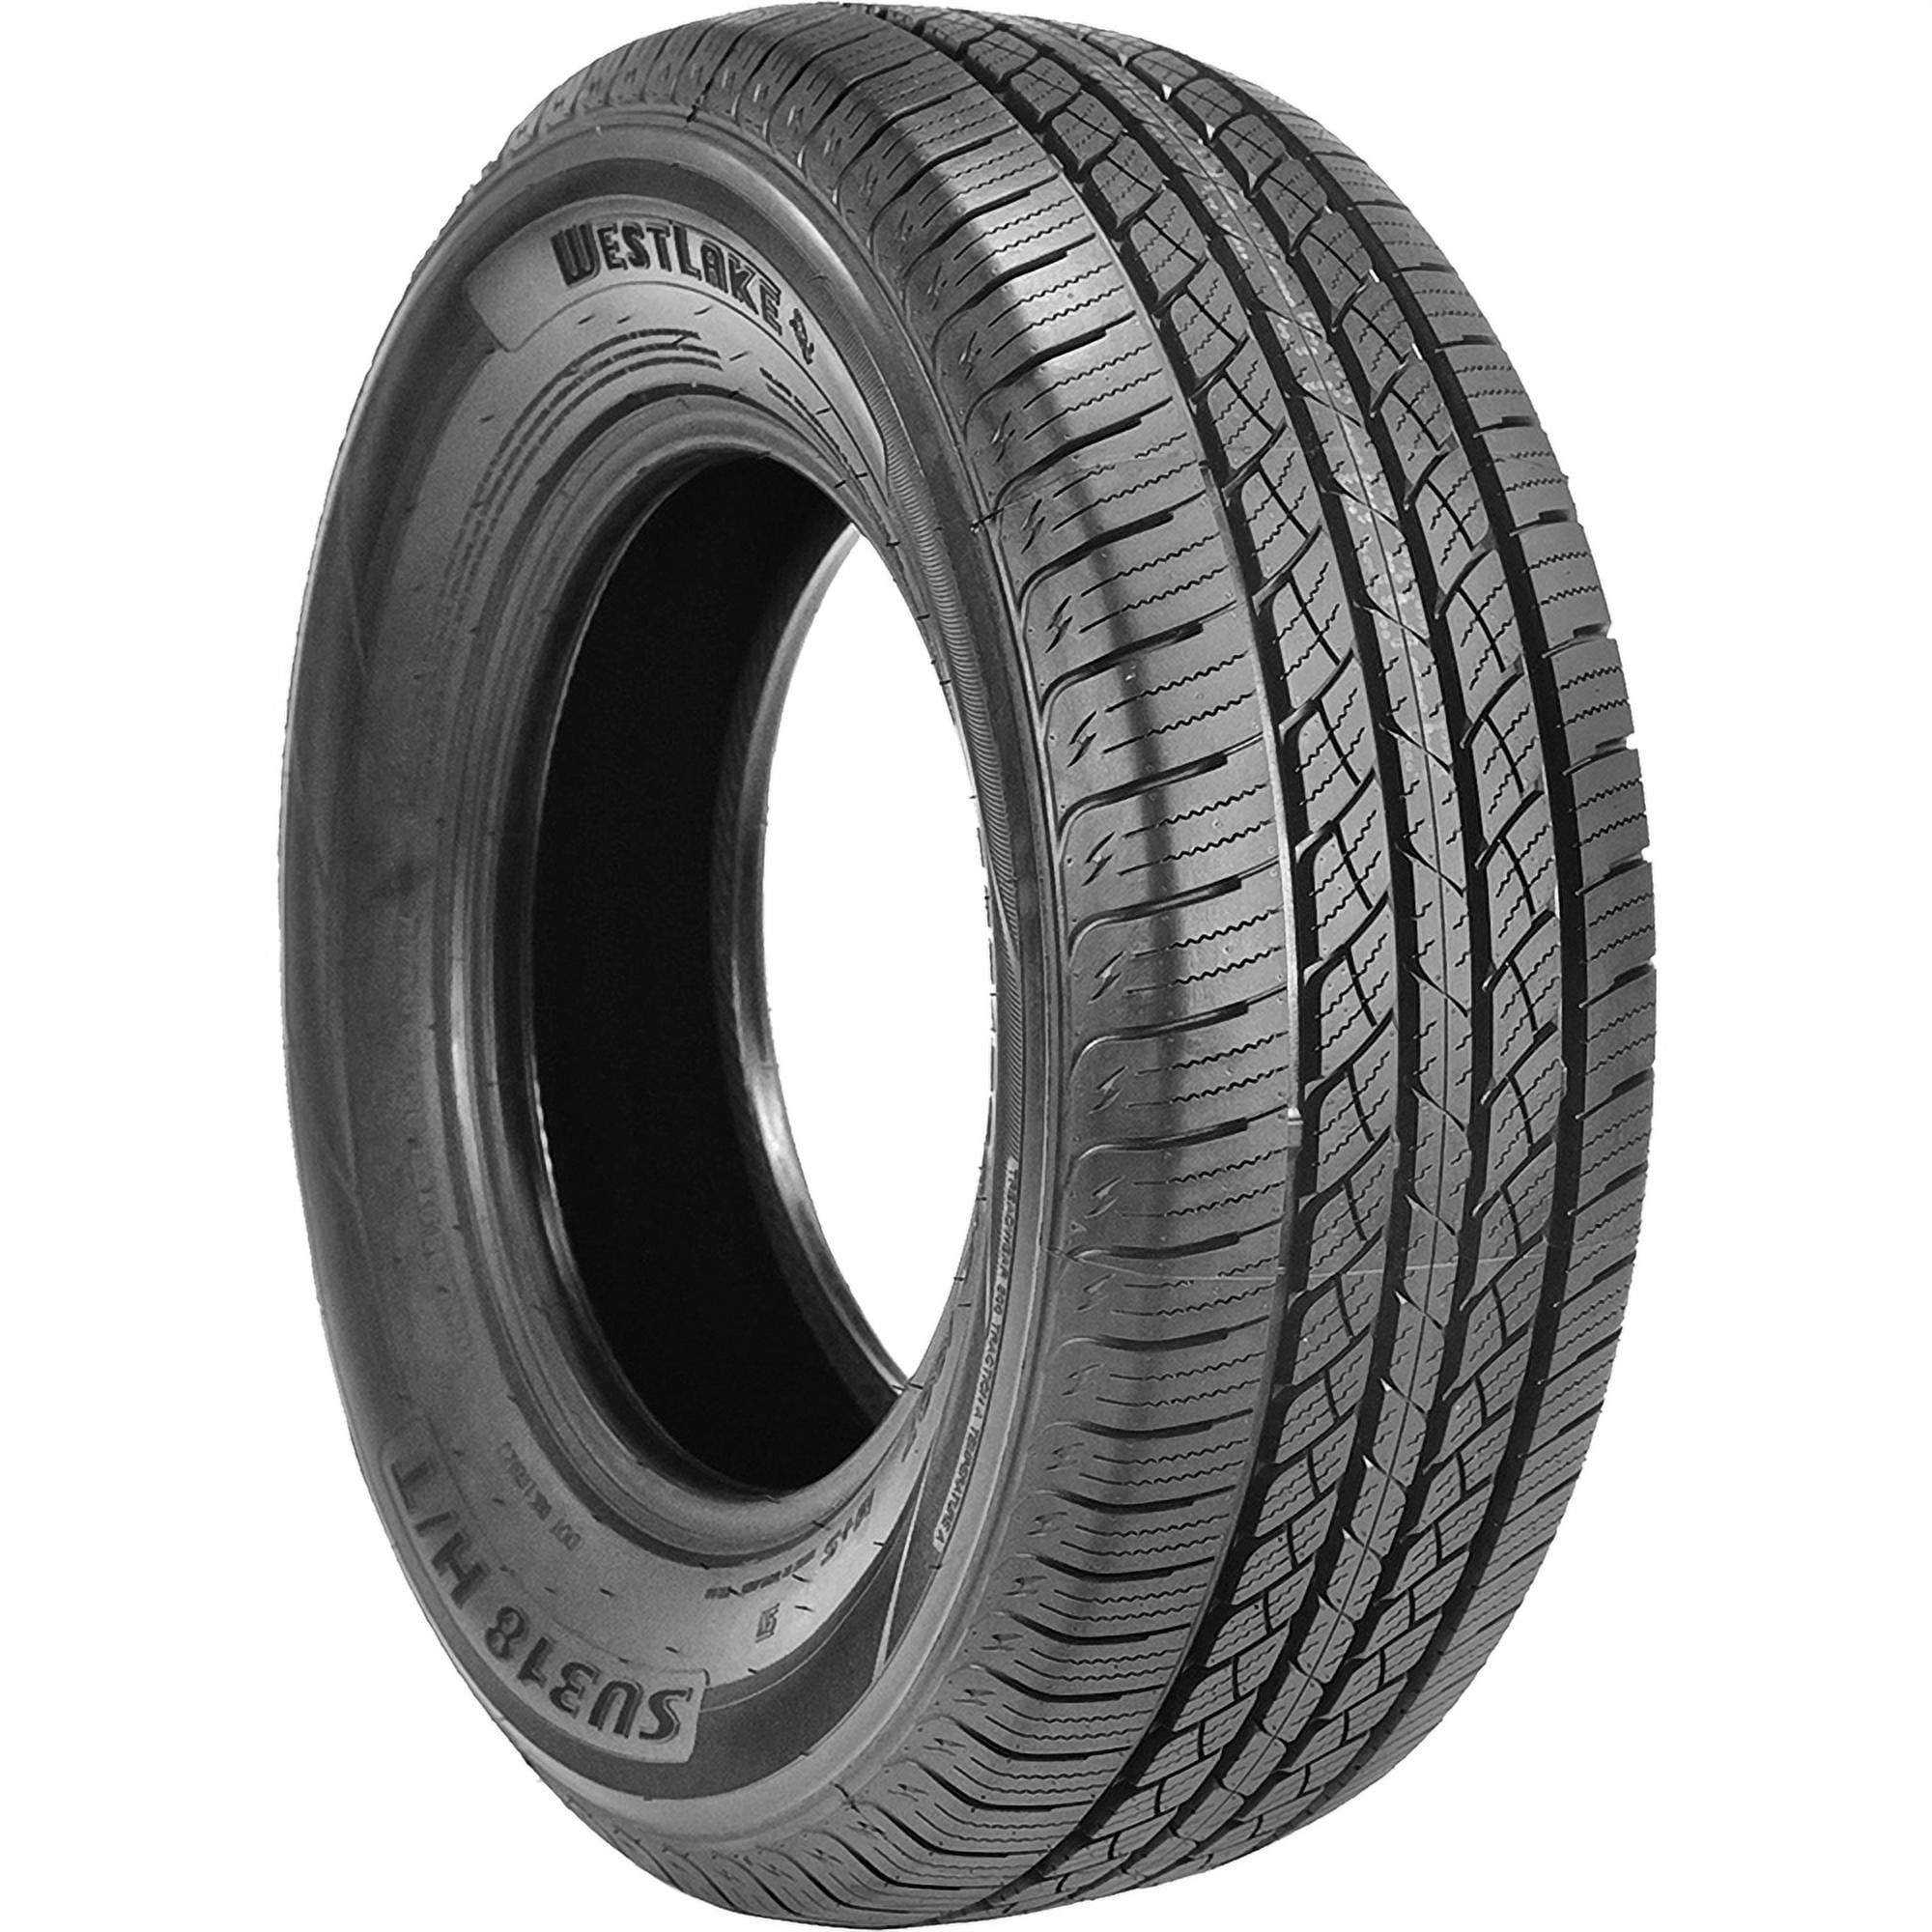 225/65R17 102T Westlake SU318 All-Season Radial Tire 